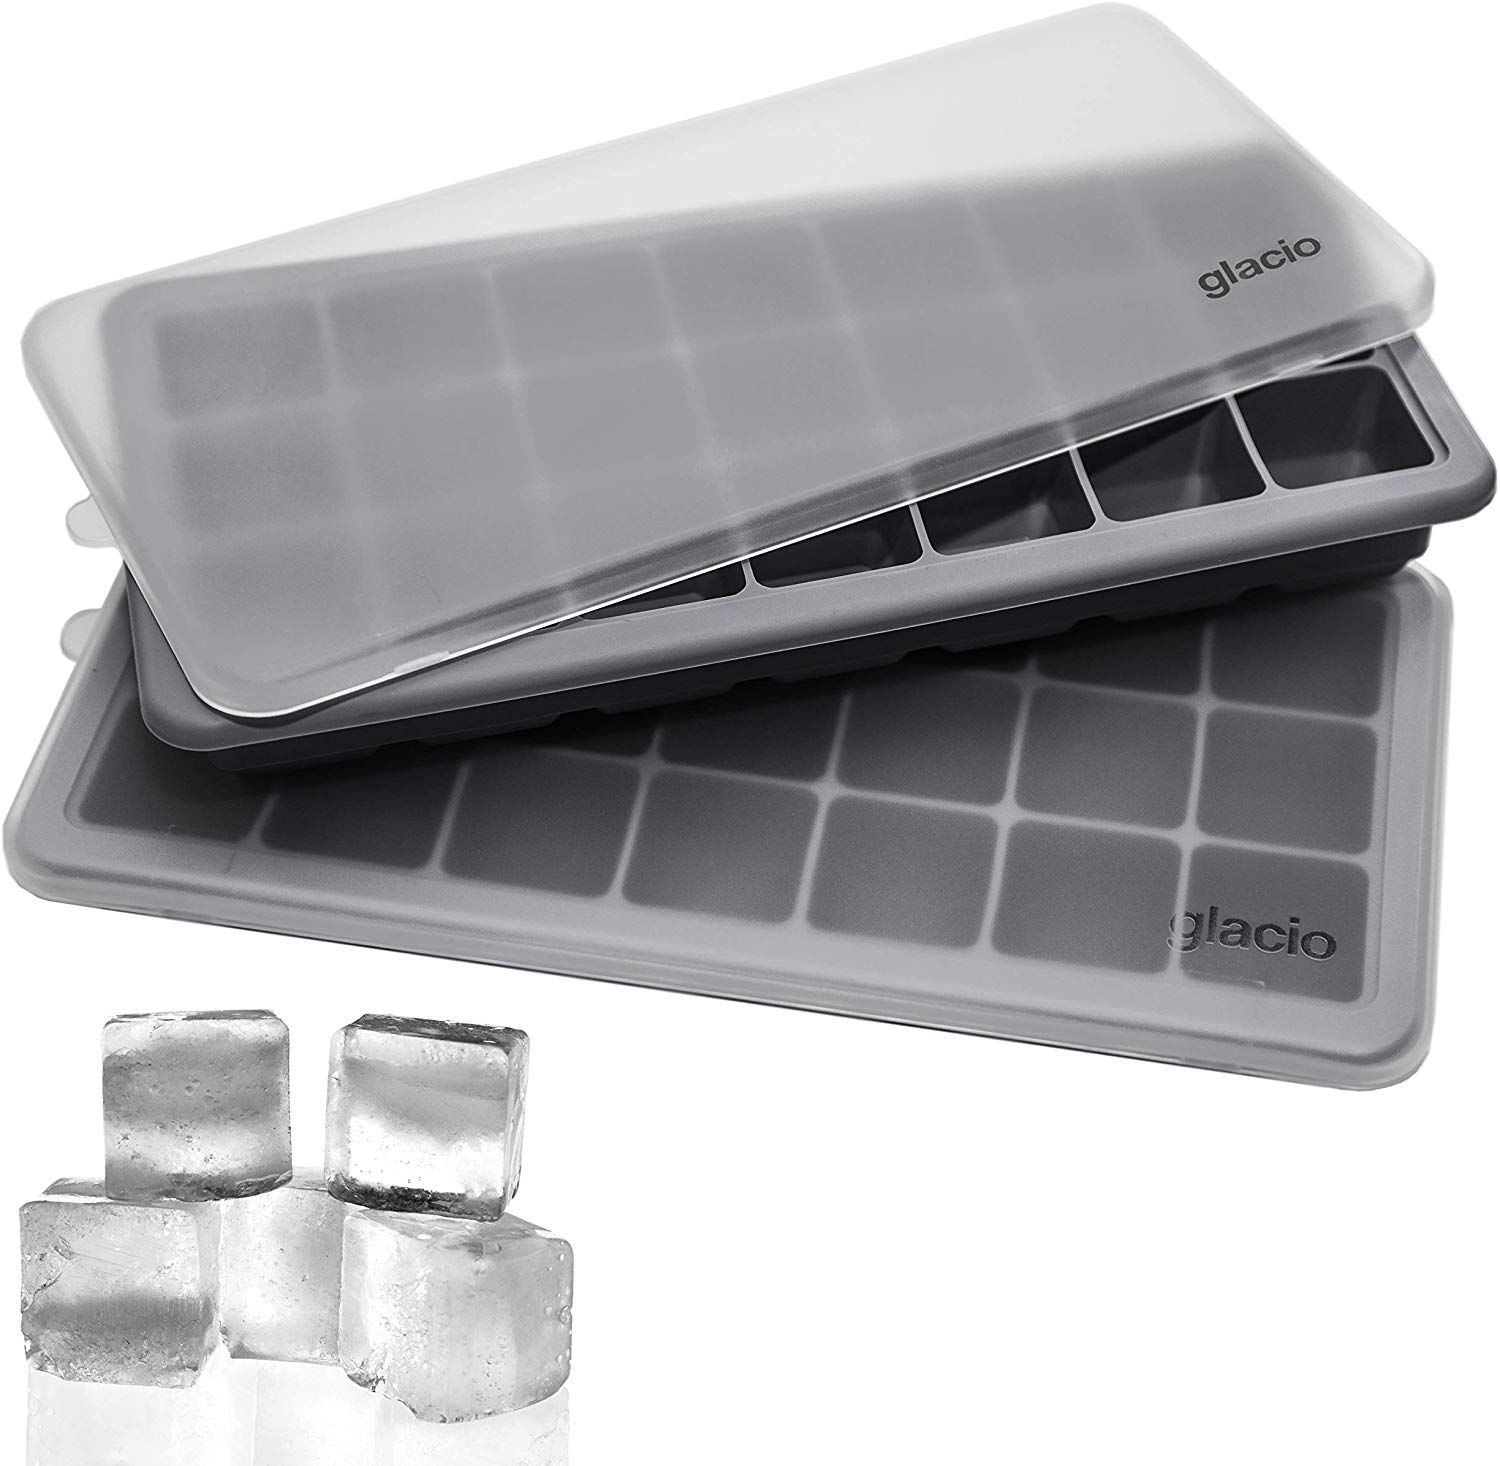 glacio Silicone Ice Cube Trays with Lids, 42-Cube